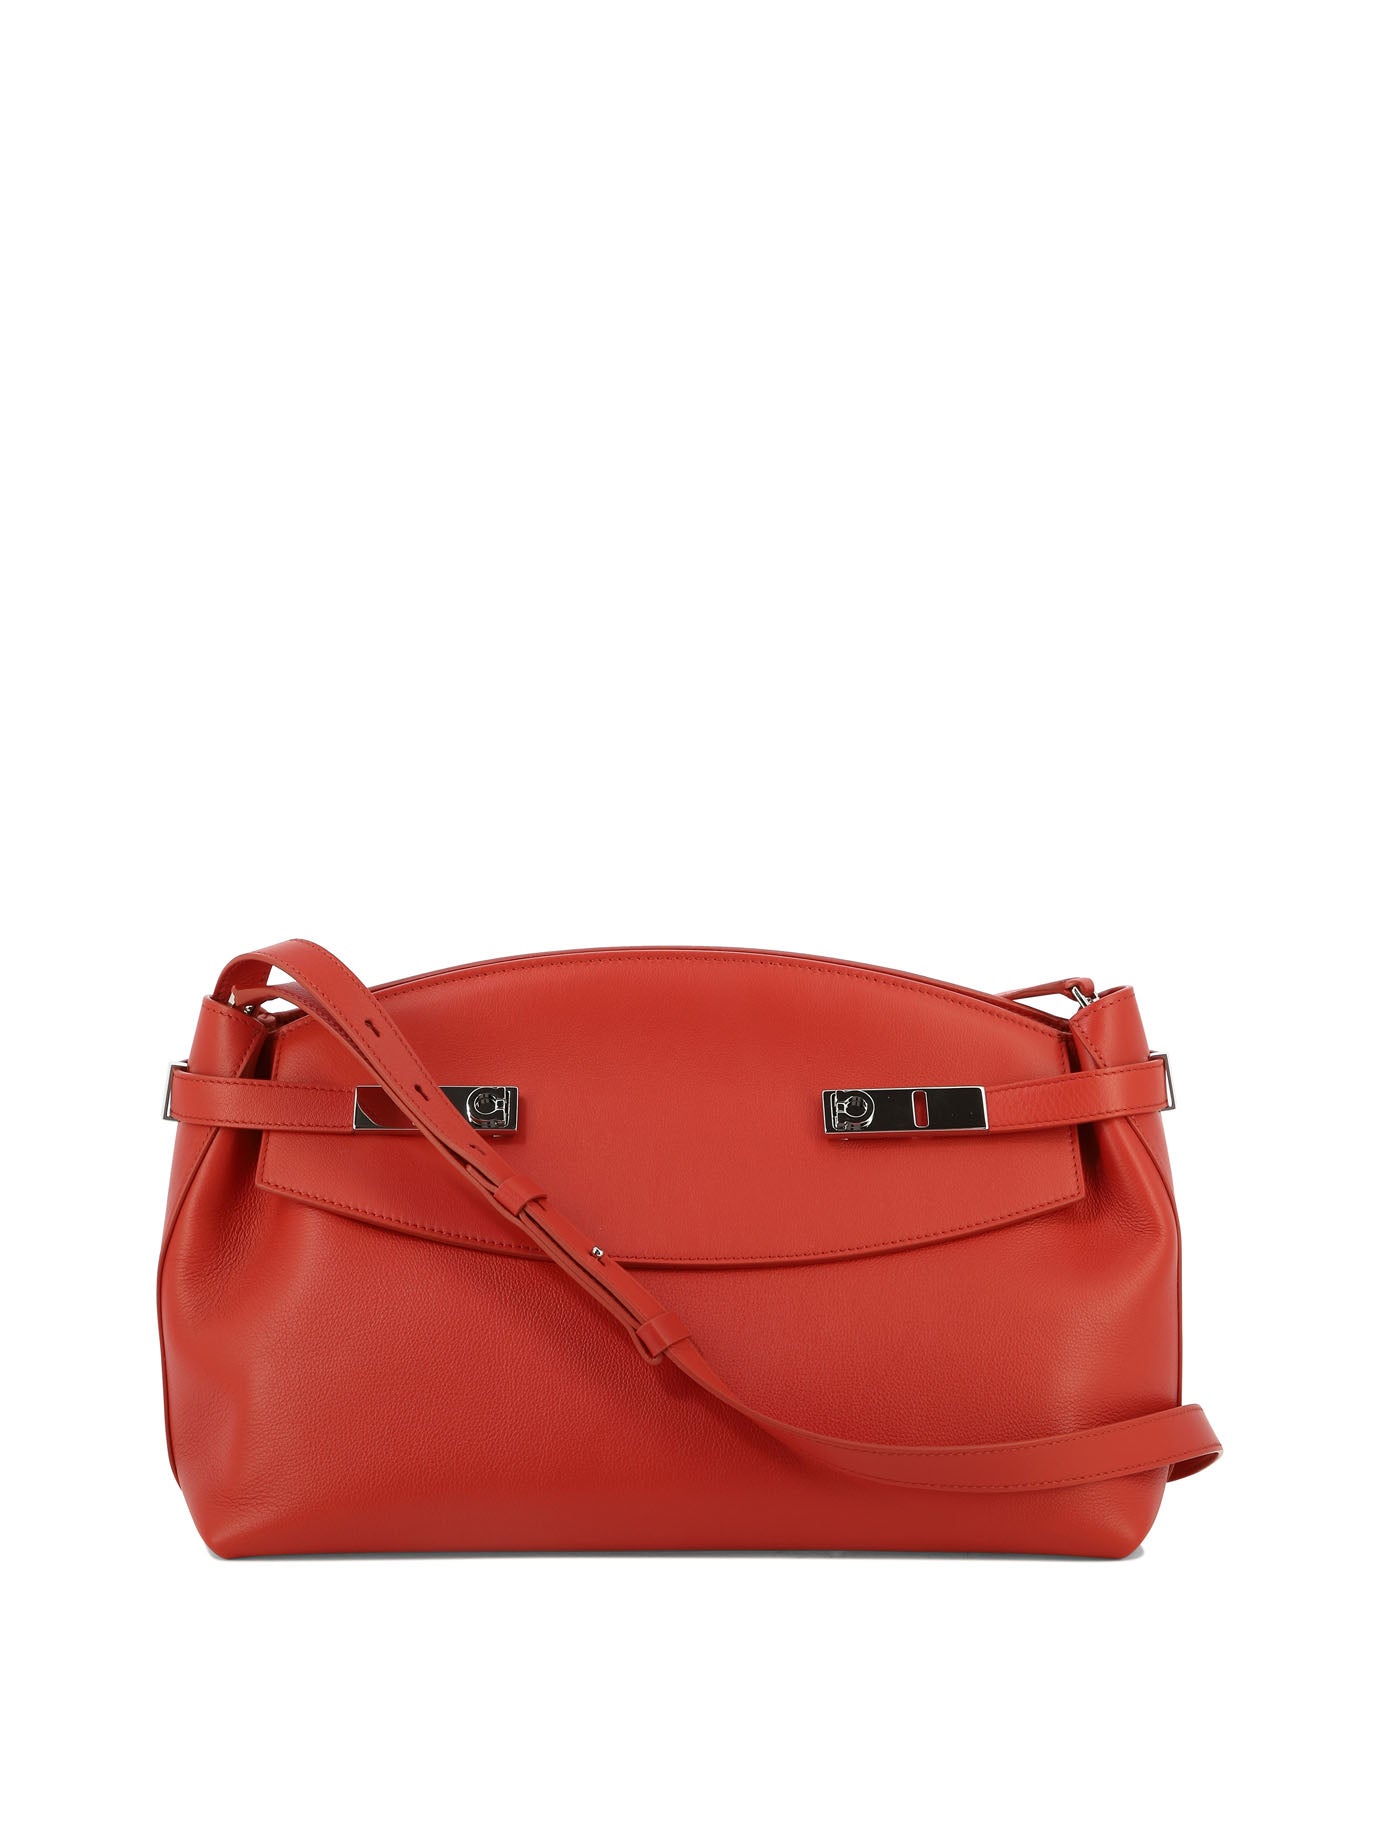 Ferragamo Sophisticated Crossbody Handbag In Fiery Red For The Fashionable Woman